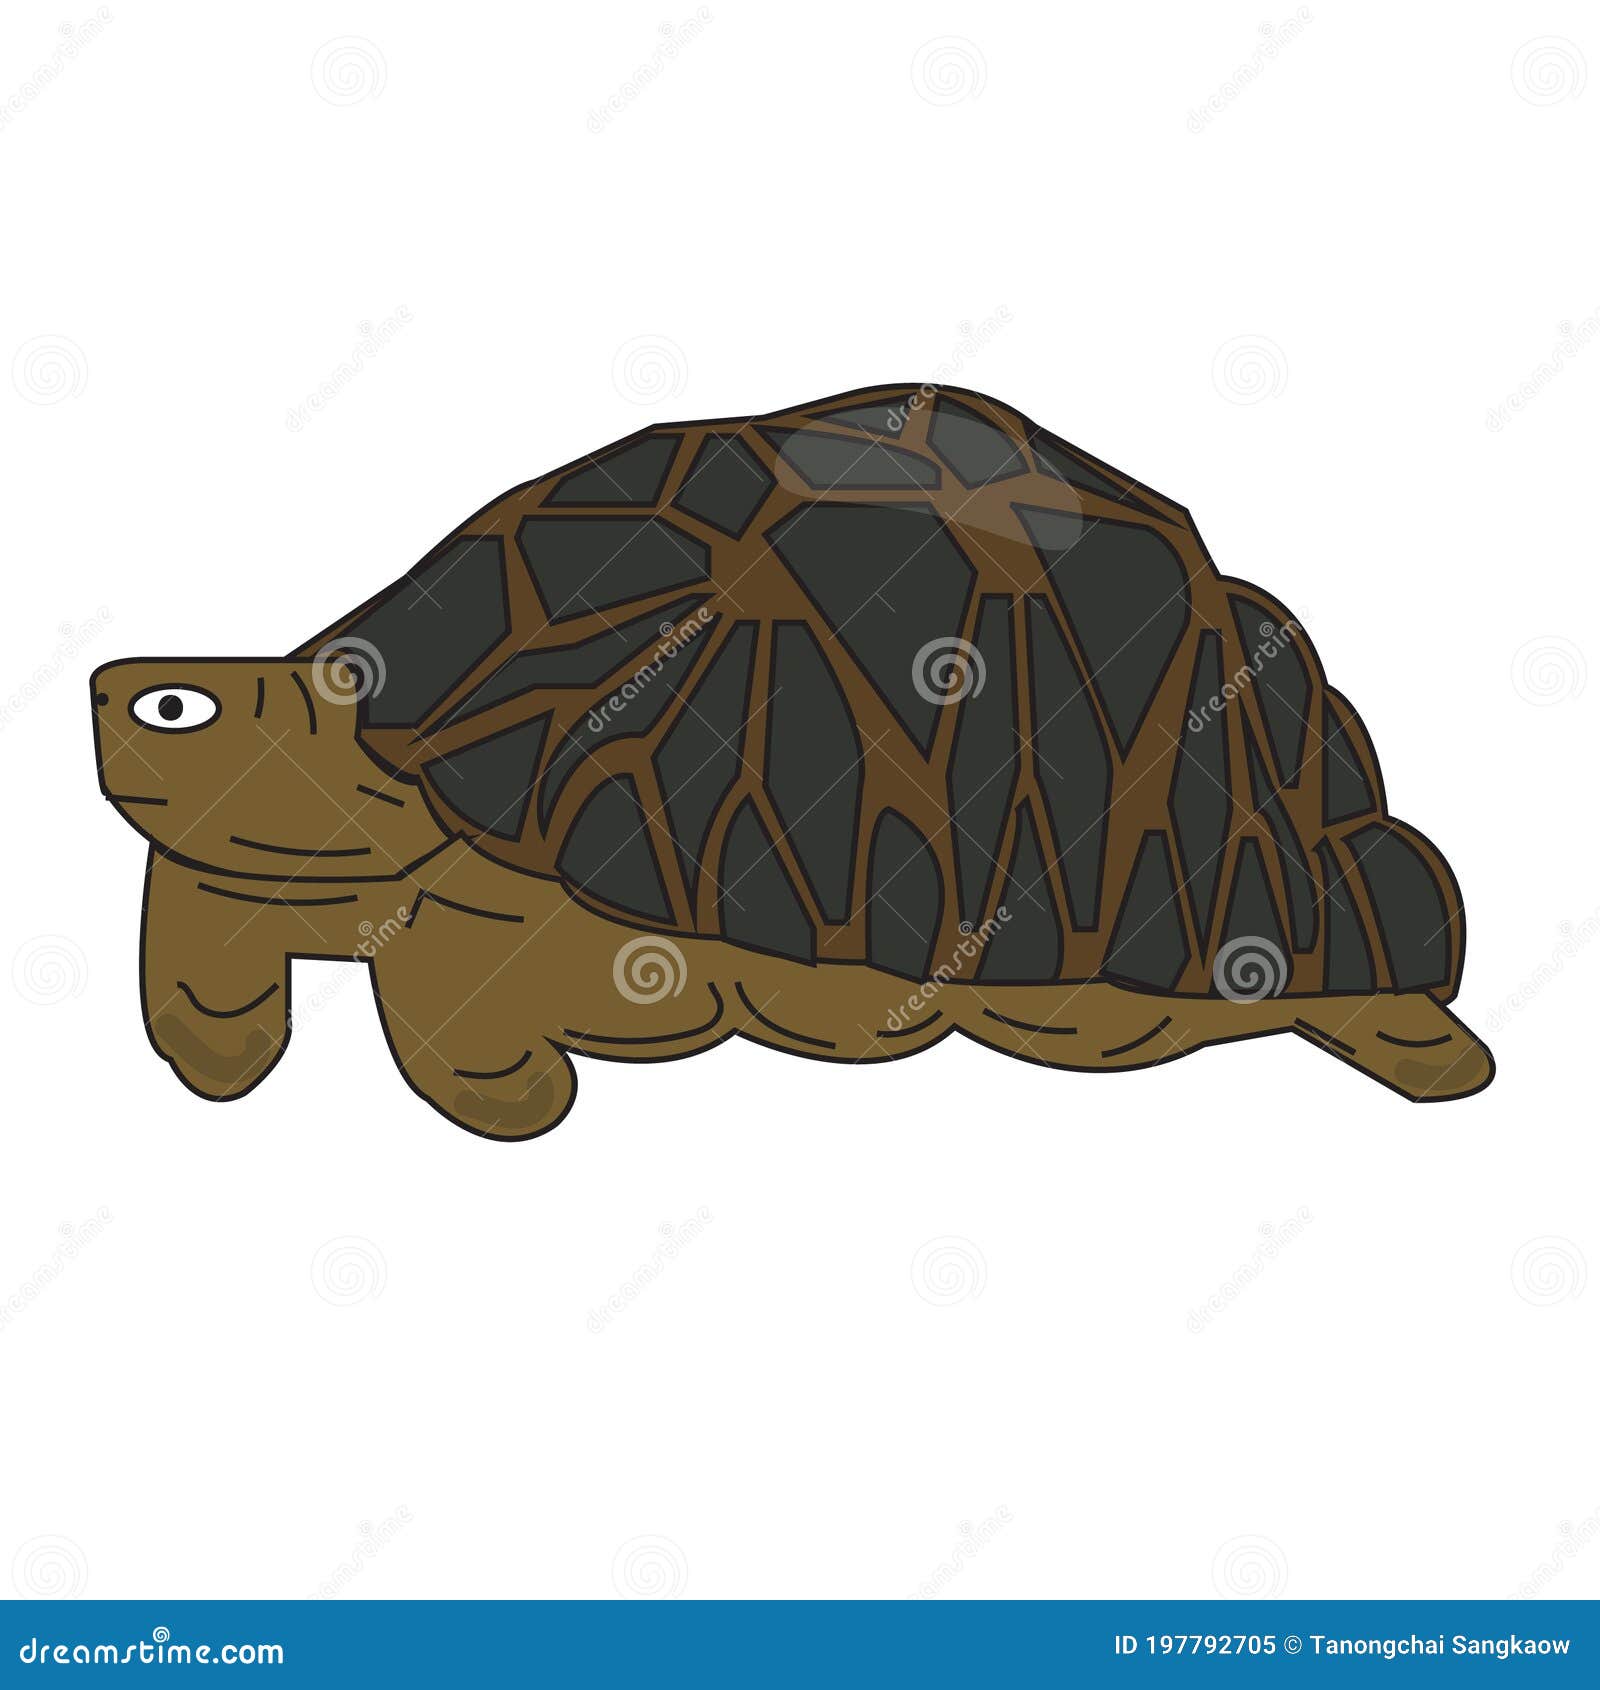 green turtle, tortoiseshell,